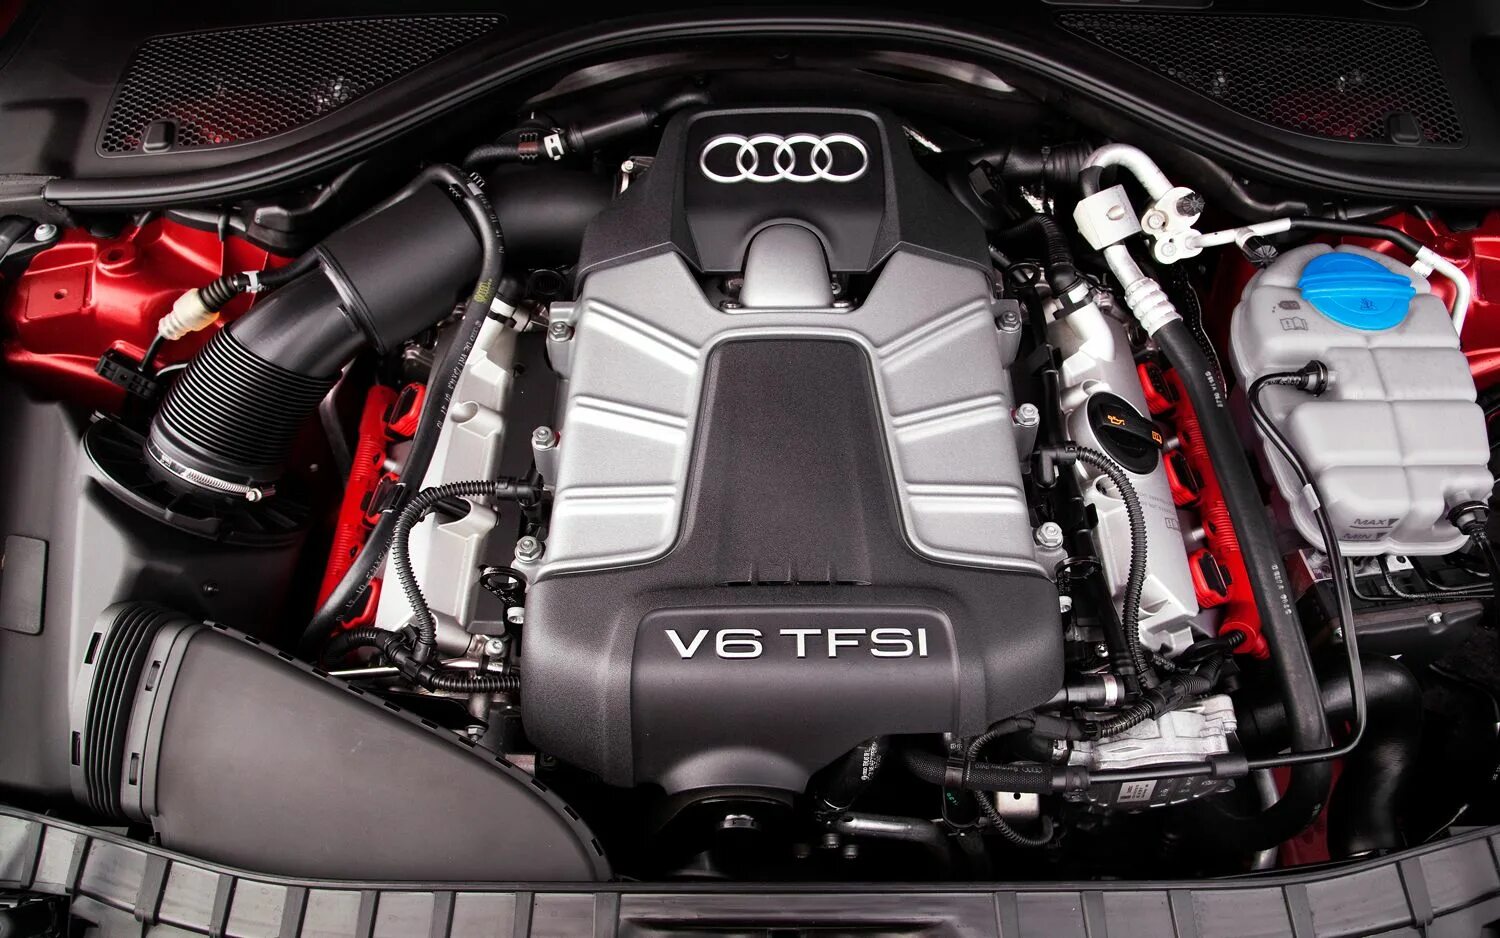 Ауди двиг. Двигатель Ауди рс7. Audi a7 3.0 TFSI Supercharger. Audi a7 движок. Двигатель Ауди а7 3.0 TFSI.